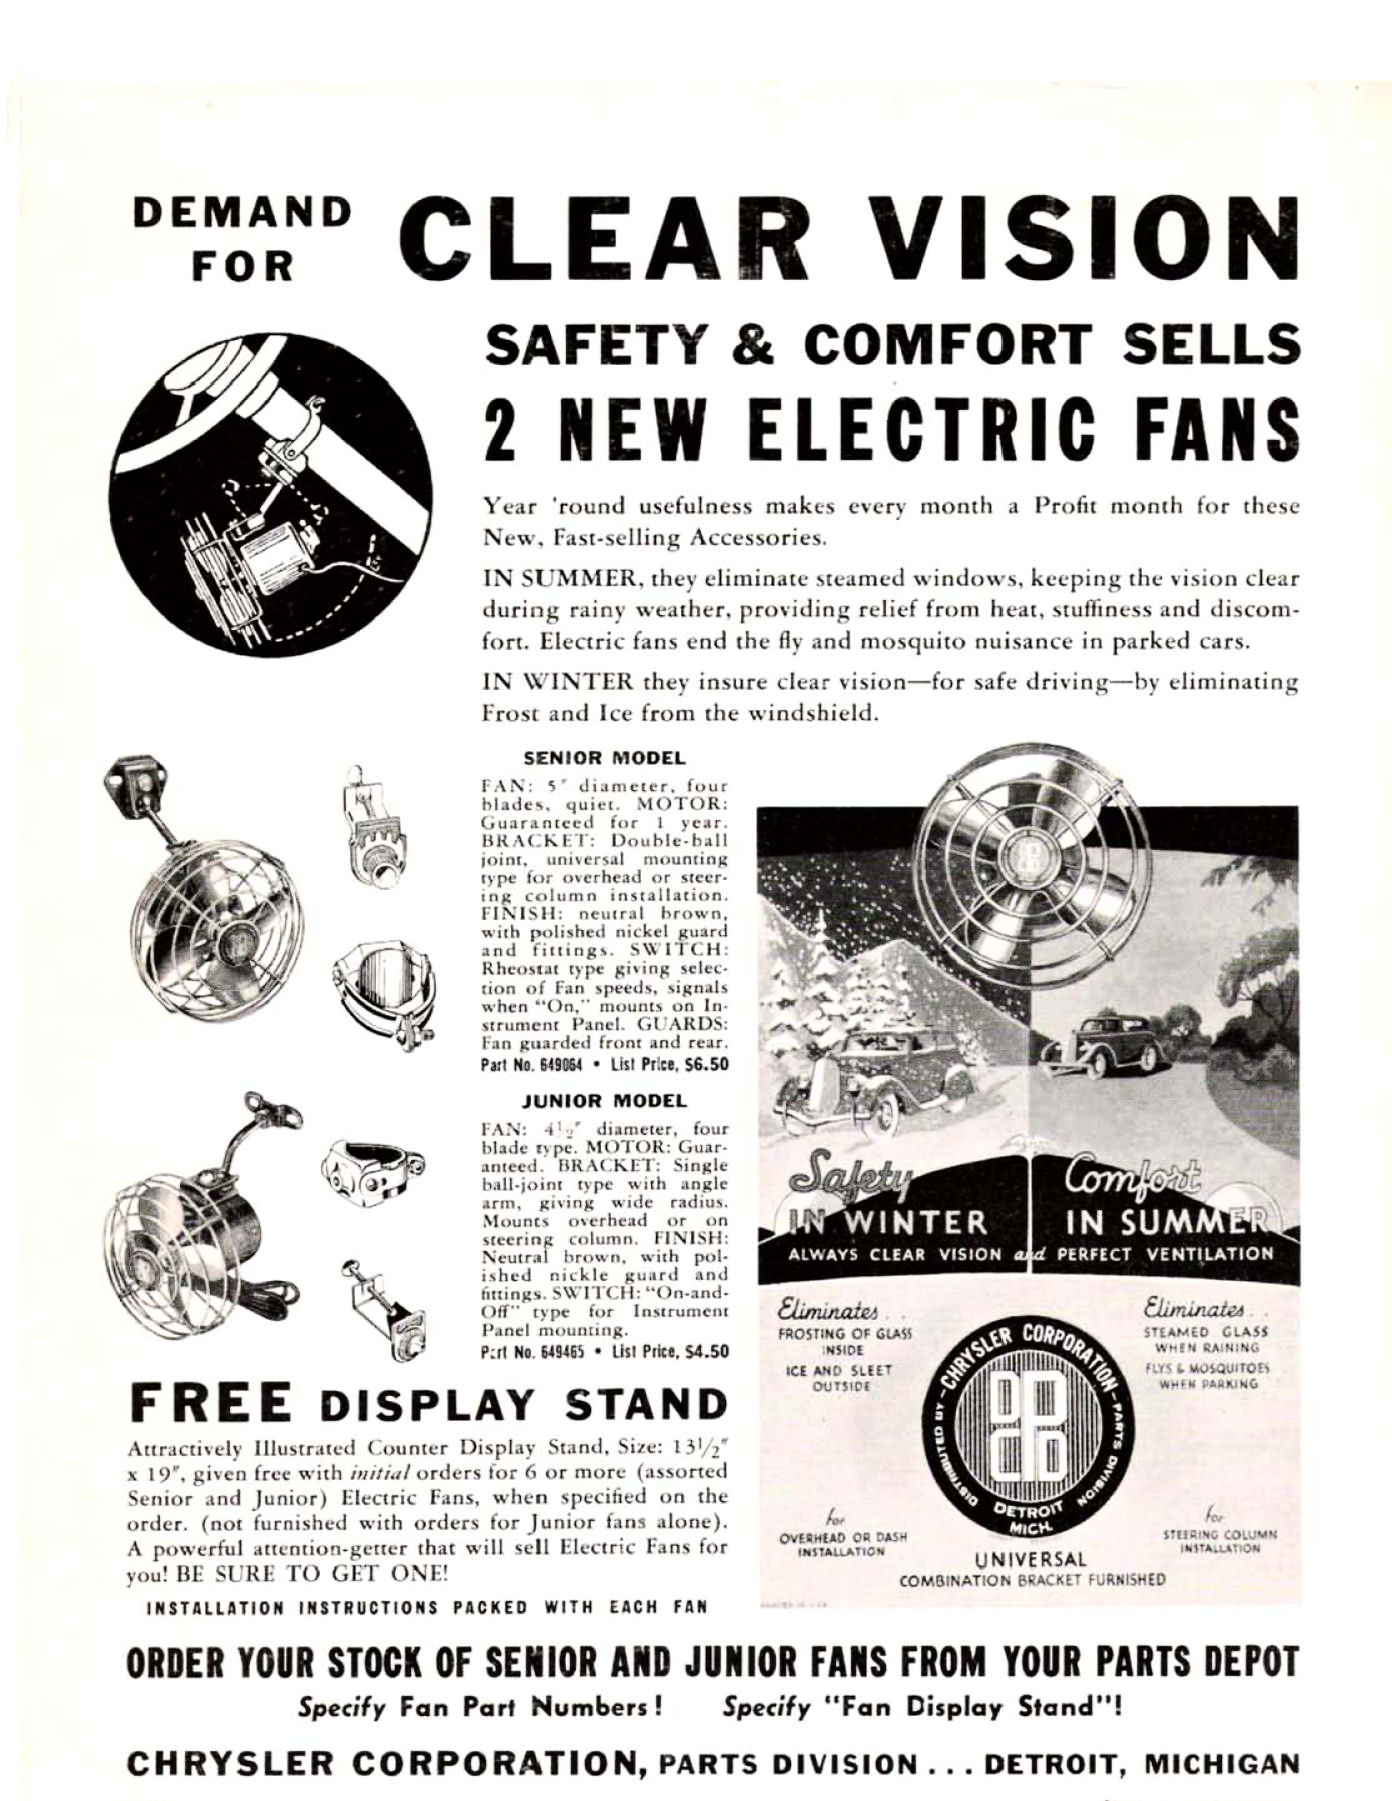 1935_Chrysler_Clear_Vision_Fans-02